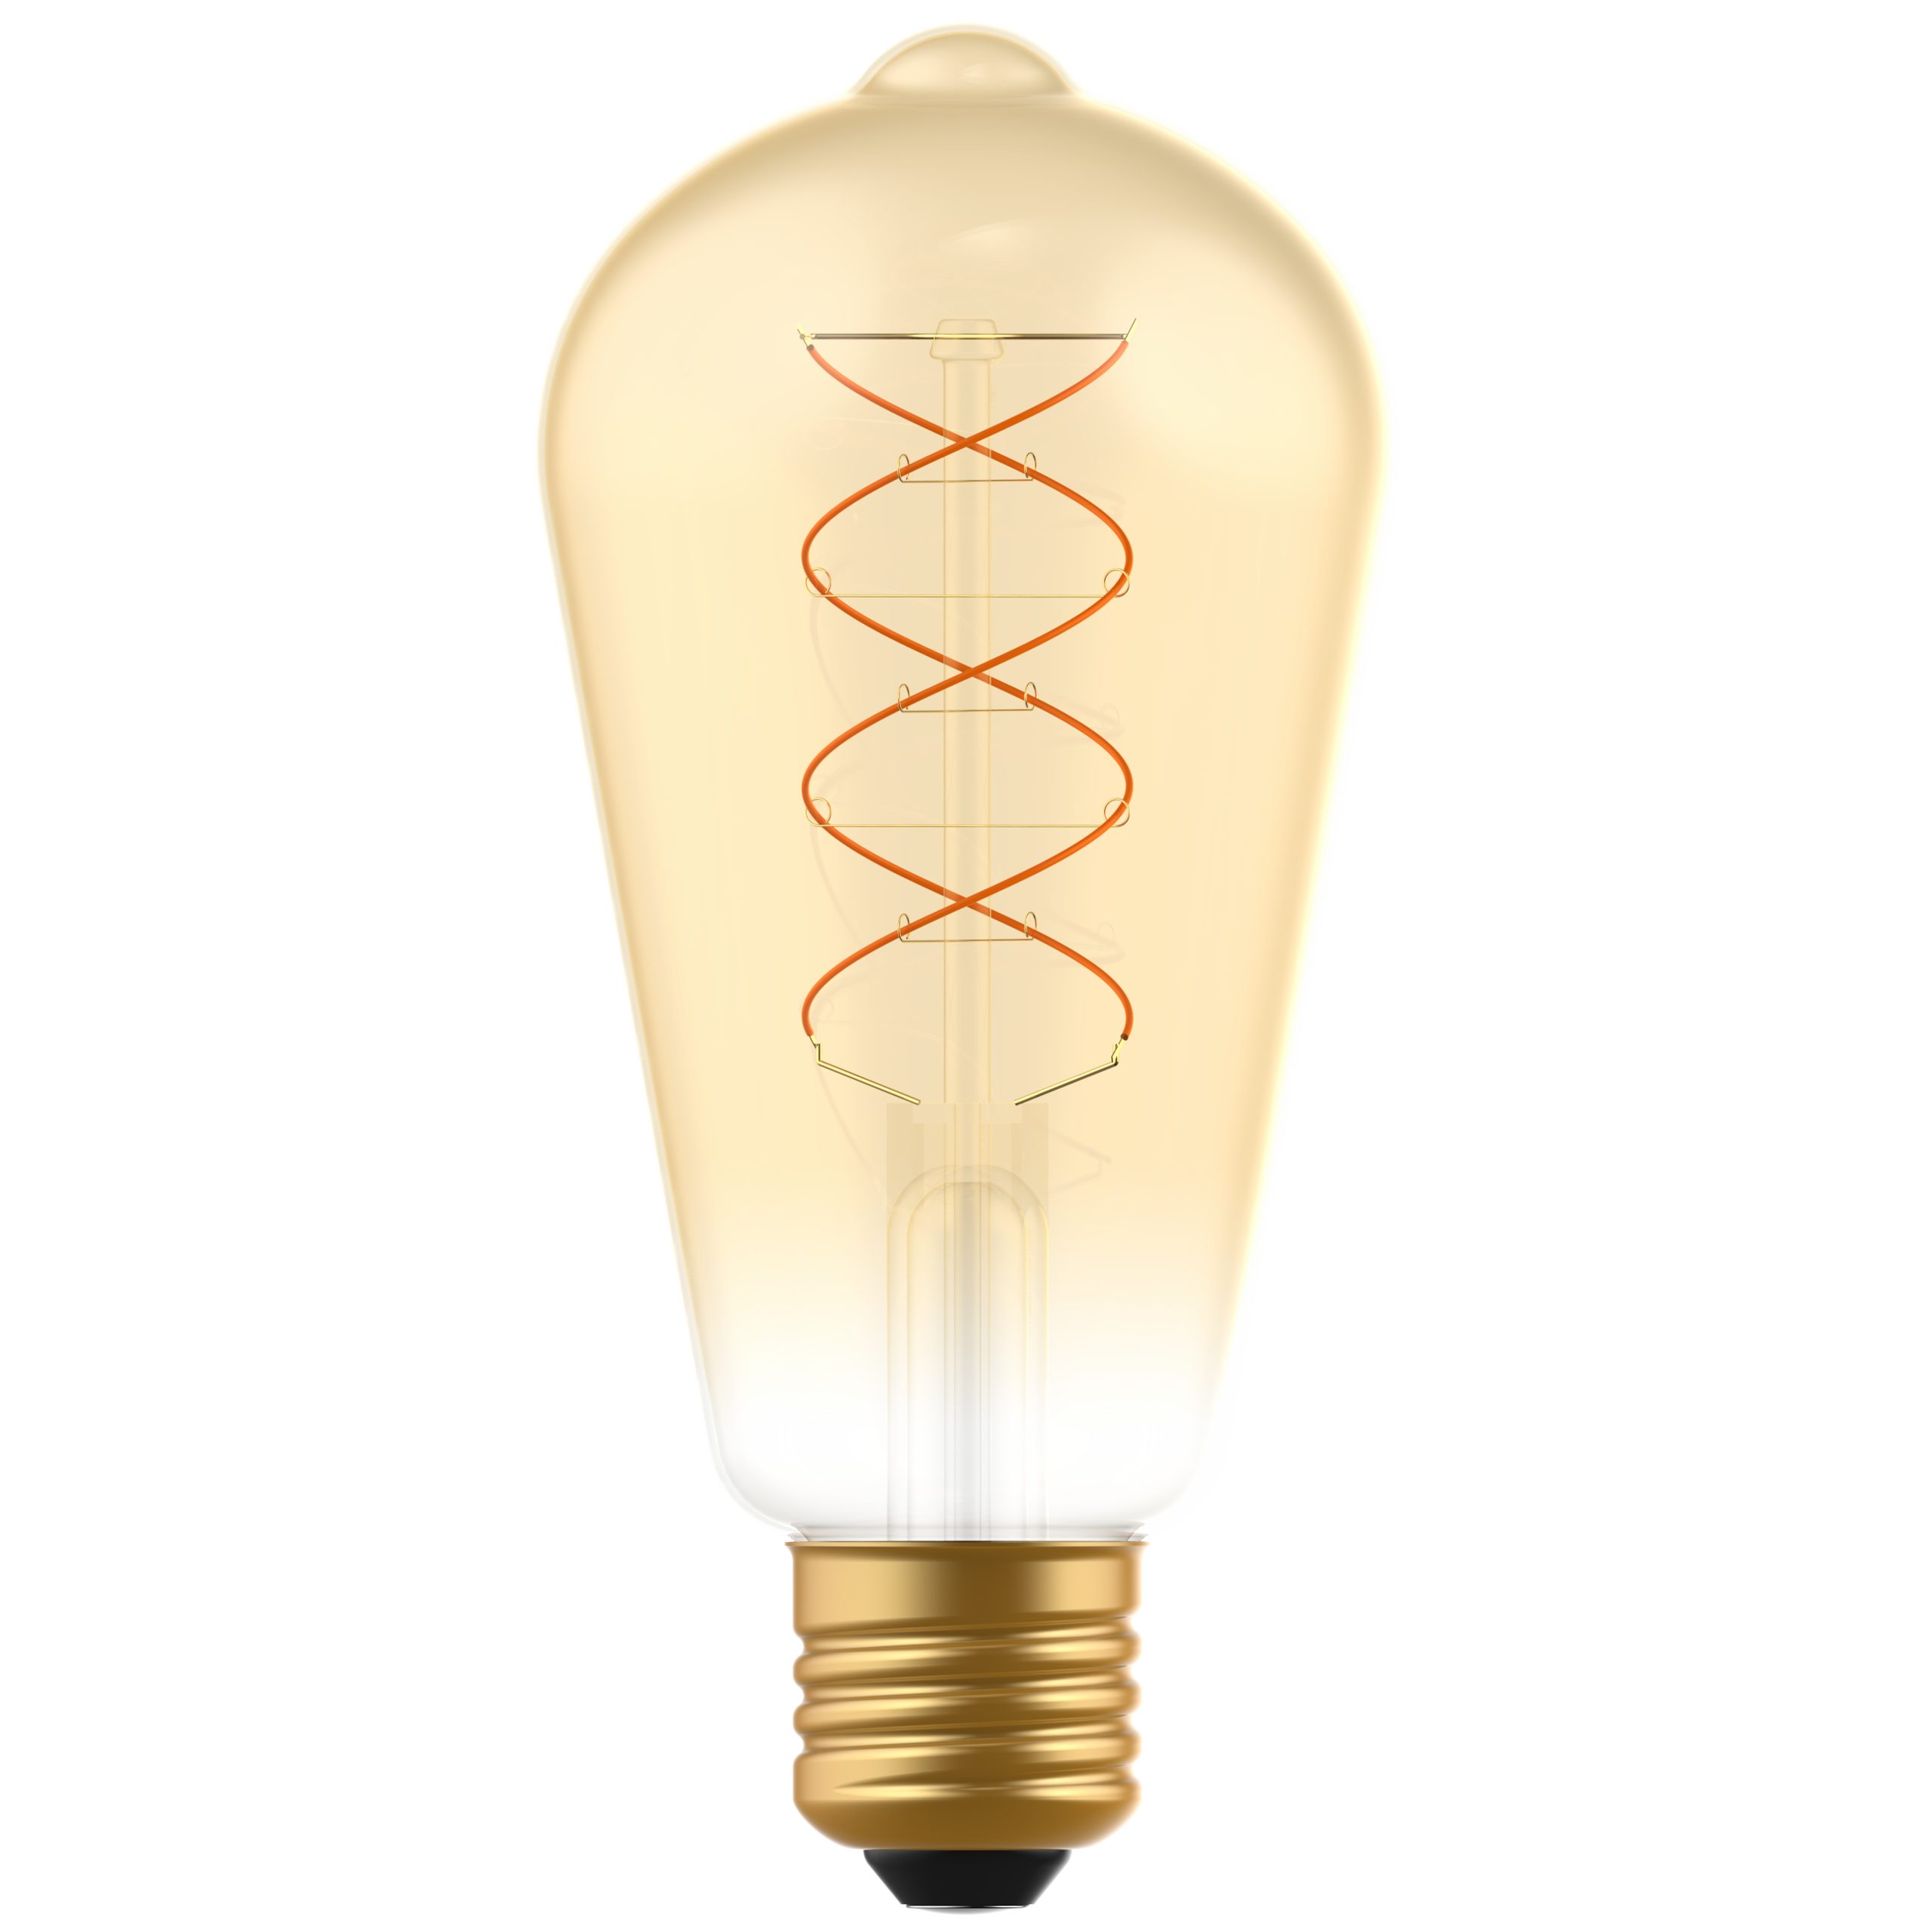 0620194 LED's dimmbar E27, E27 Gold extra-warmweiß Edison, 5W LED ST64 LED-Leuchtmittel light